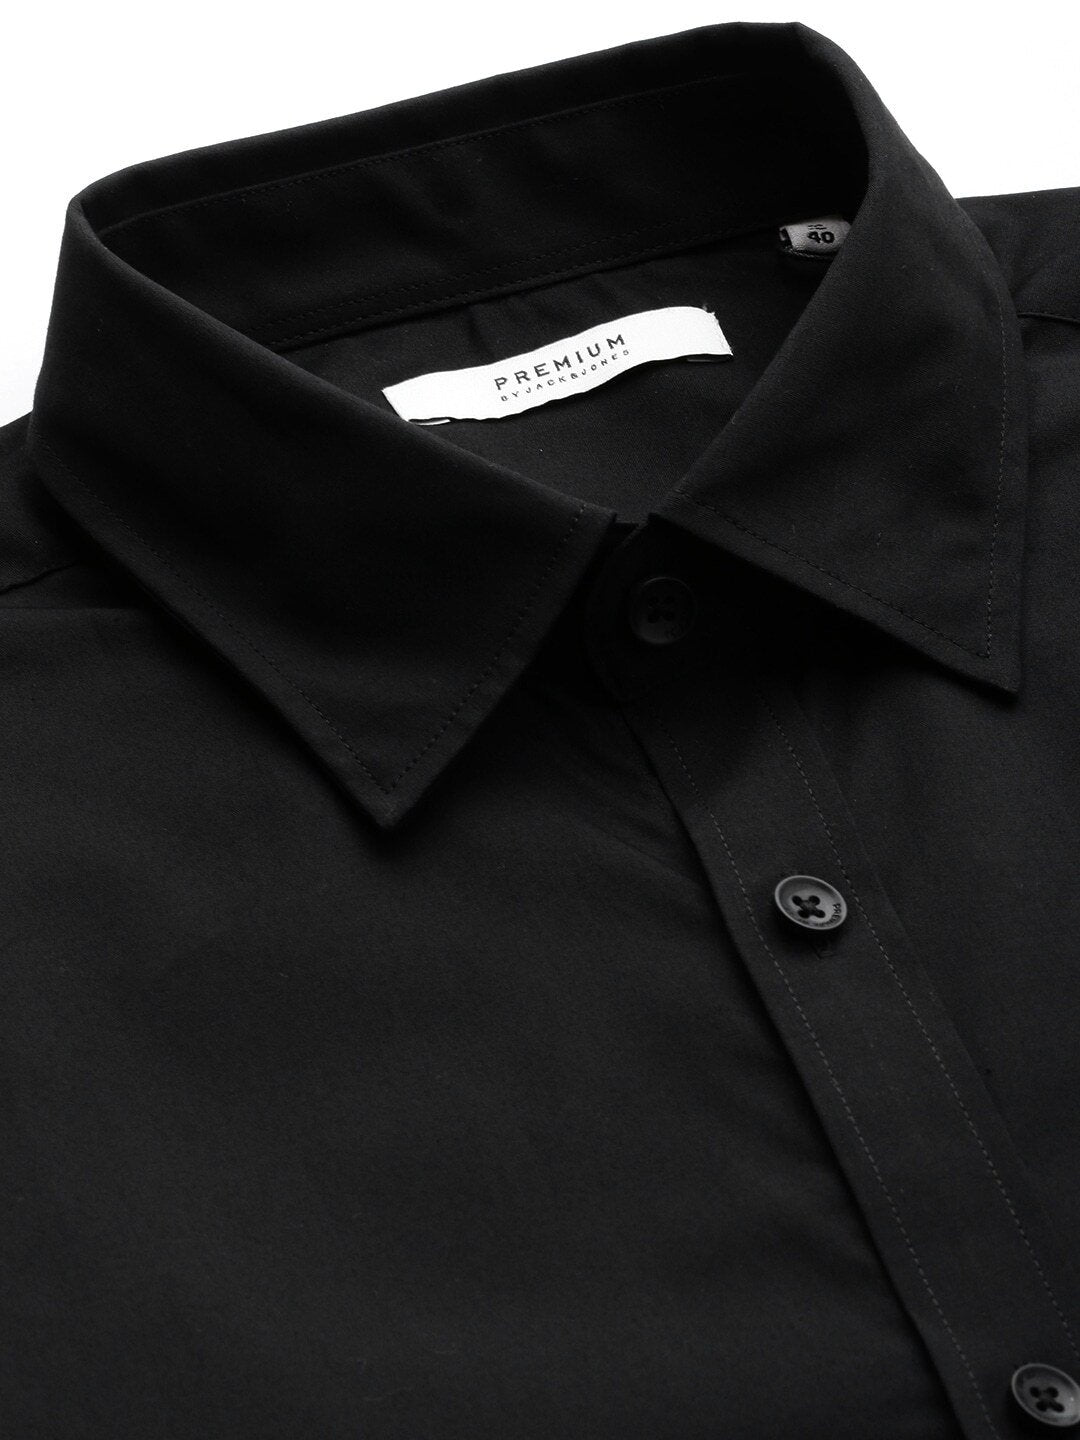 Men Black Slim Fit Solid Smart Casual Shirt-2037220015 - Discount Store